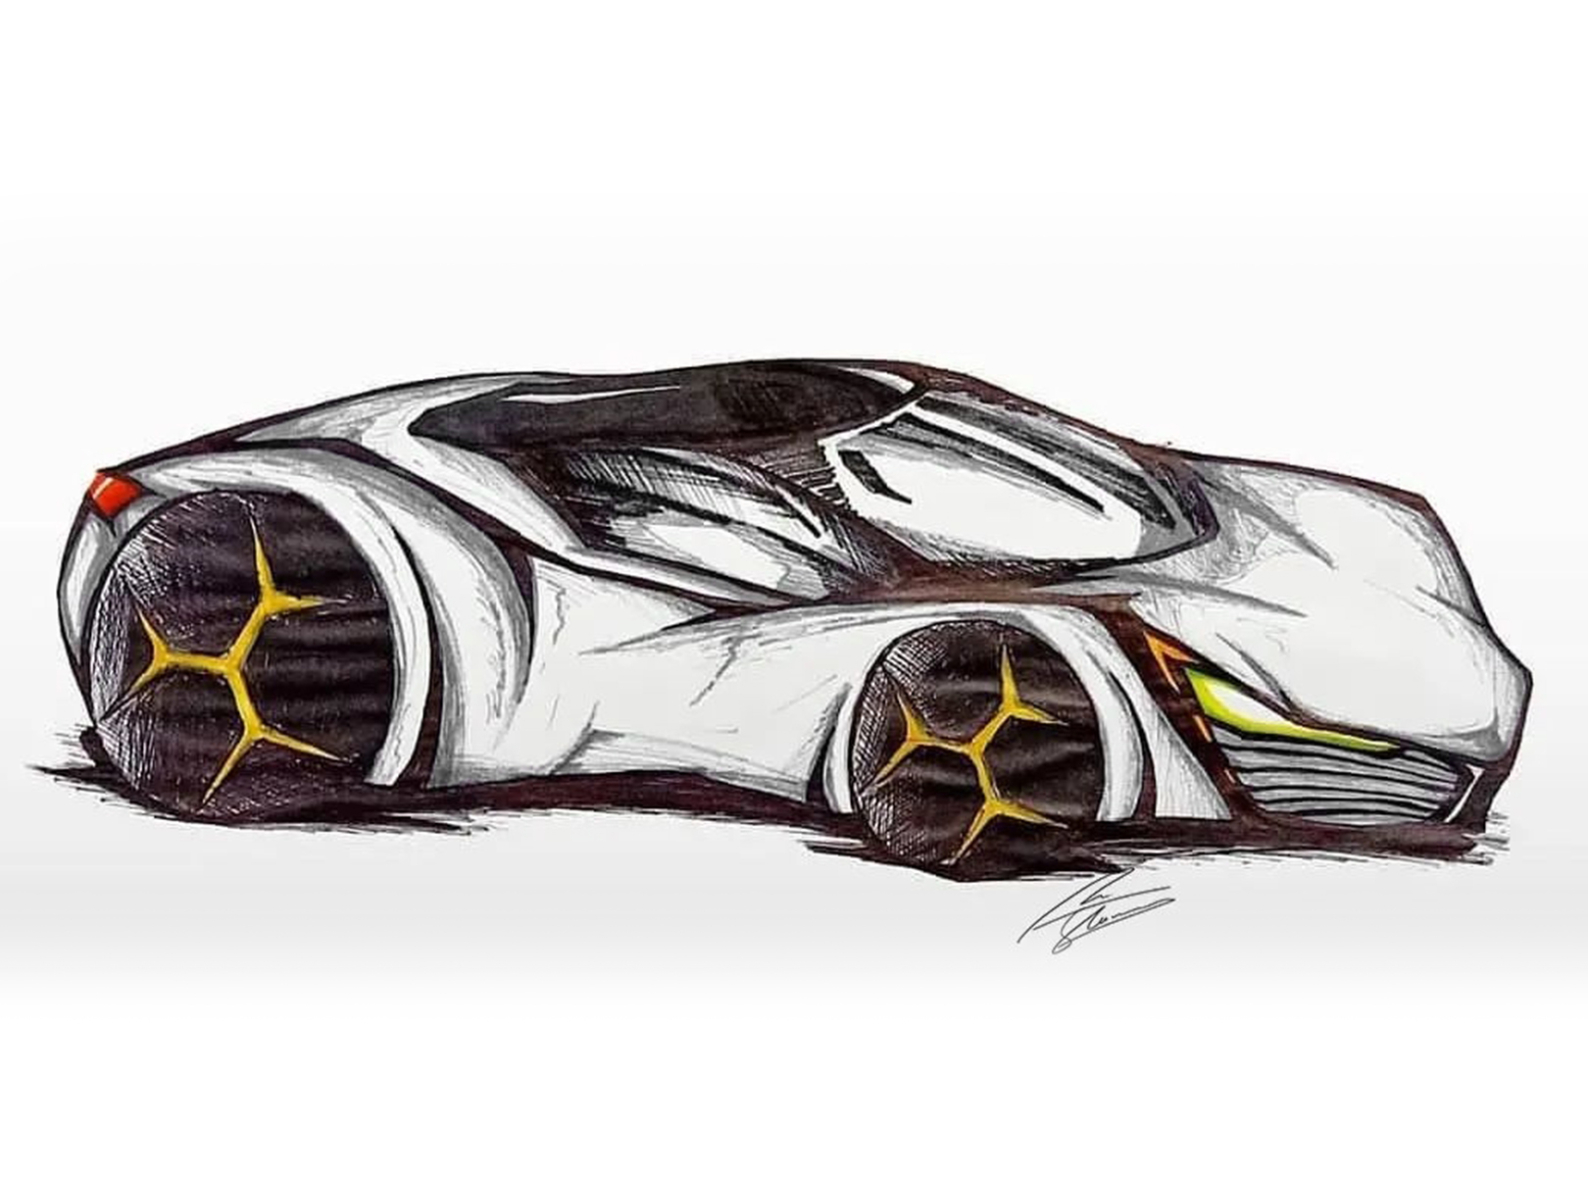 Future truck ideation Sketches by zacparkinson  GMdesign car  design cardesign cardesignsketch cardesignworld SUV  Instagram